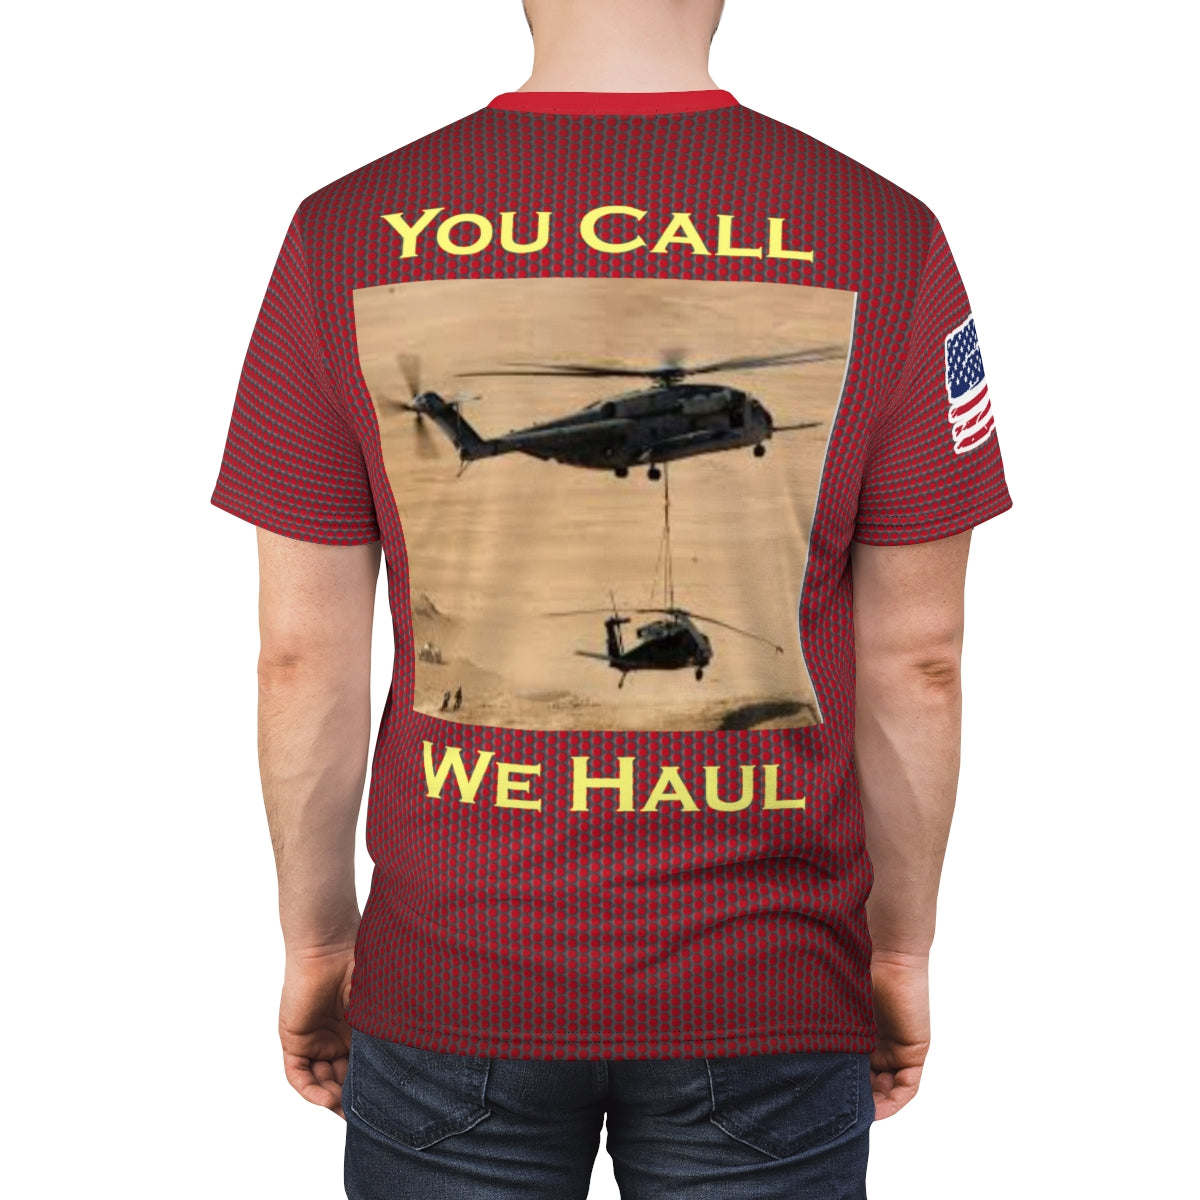 You Call We Haul HMH-465 Black Premium Shirt